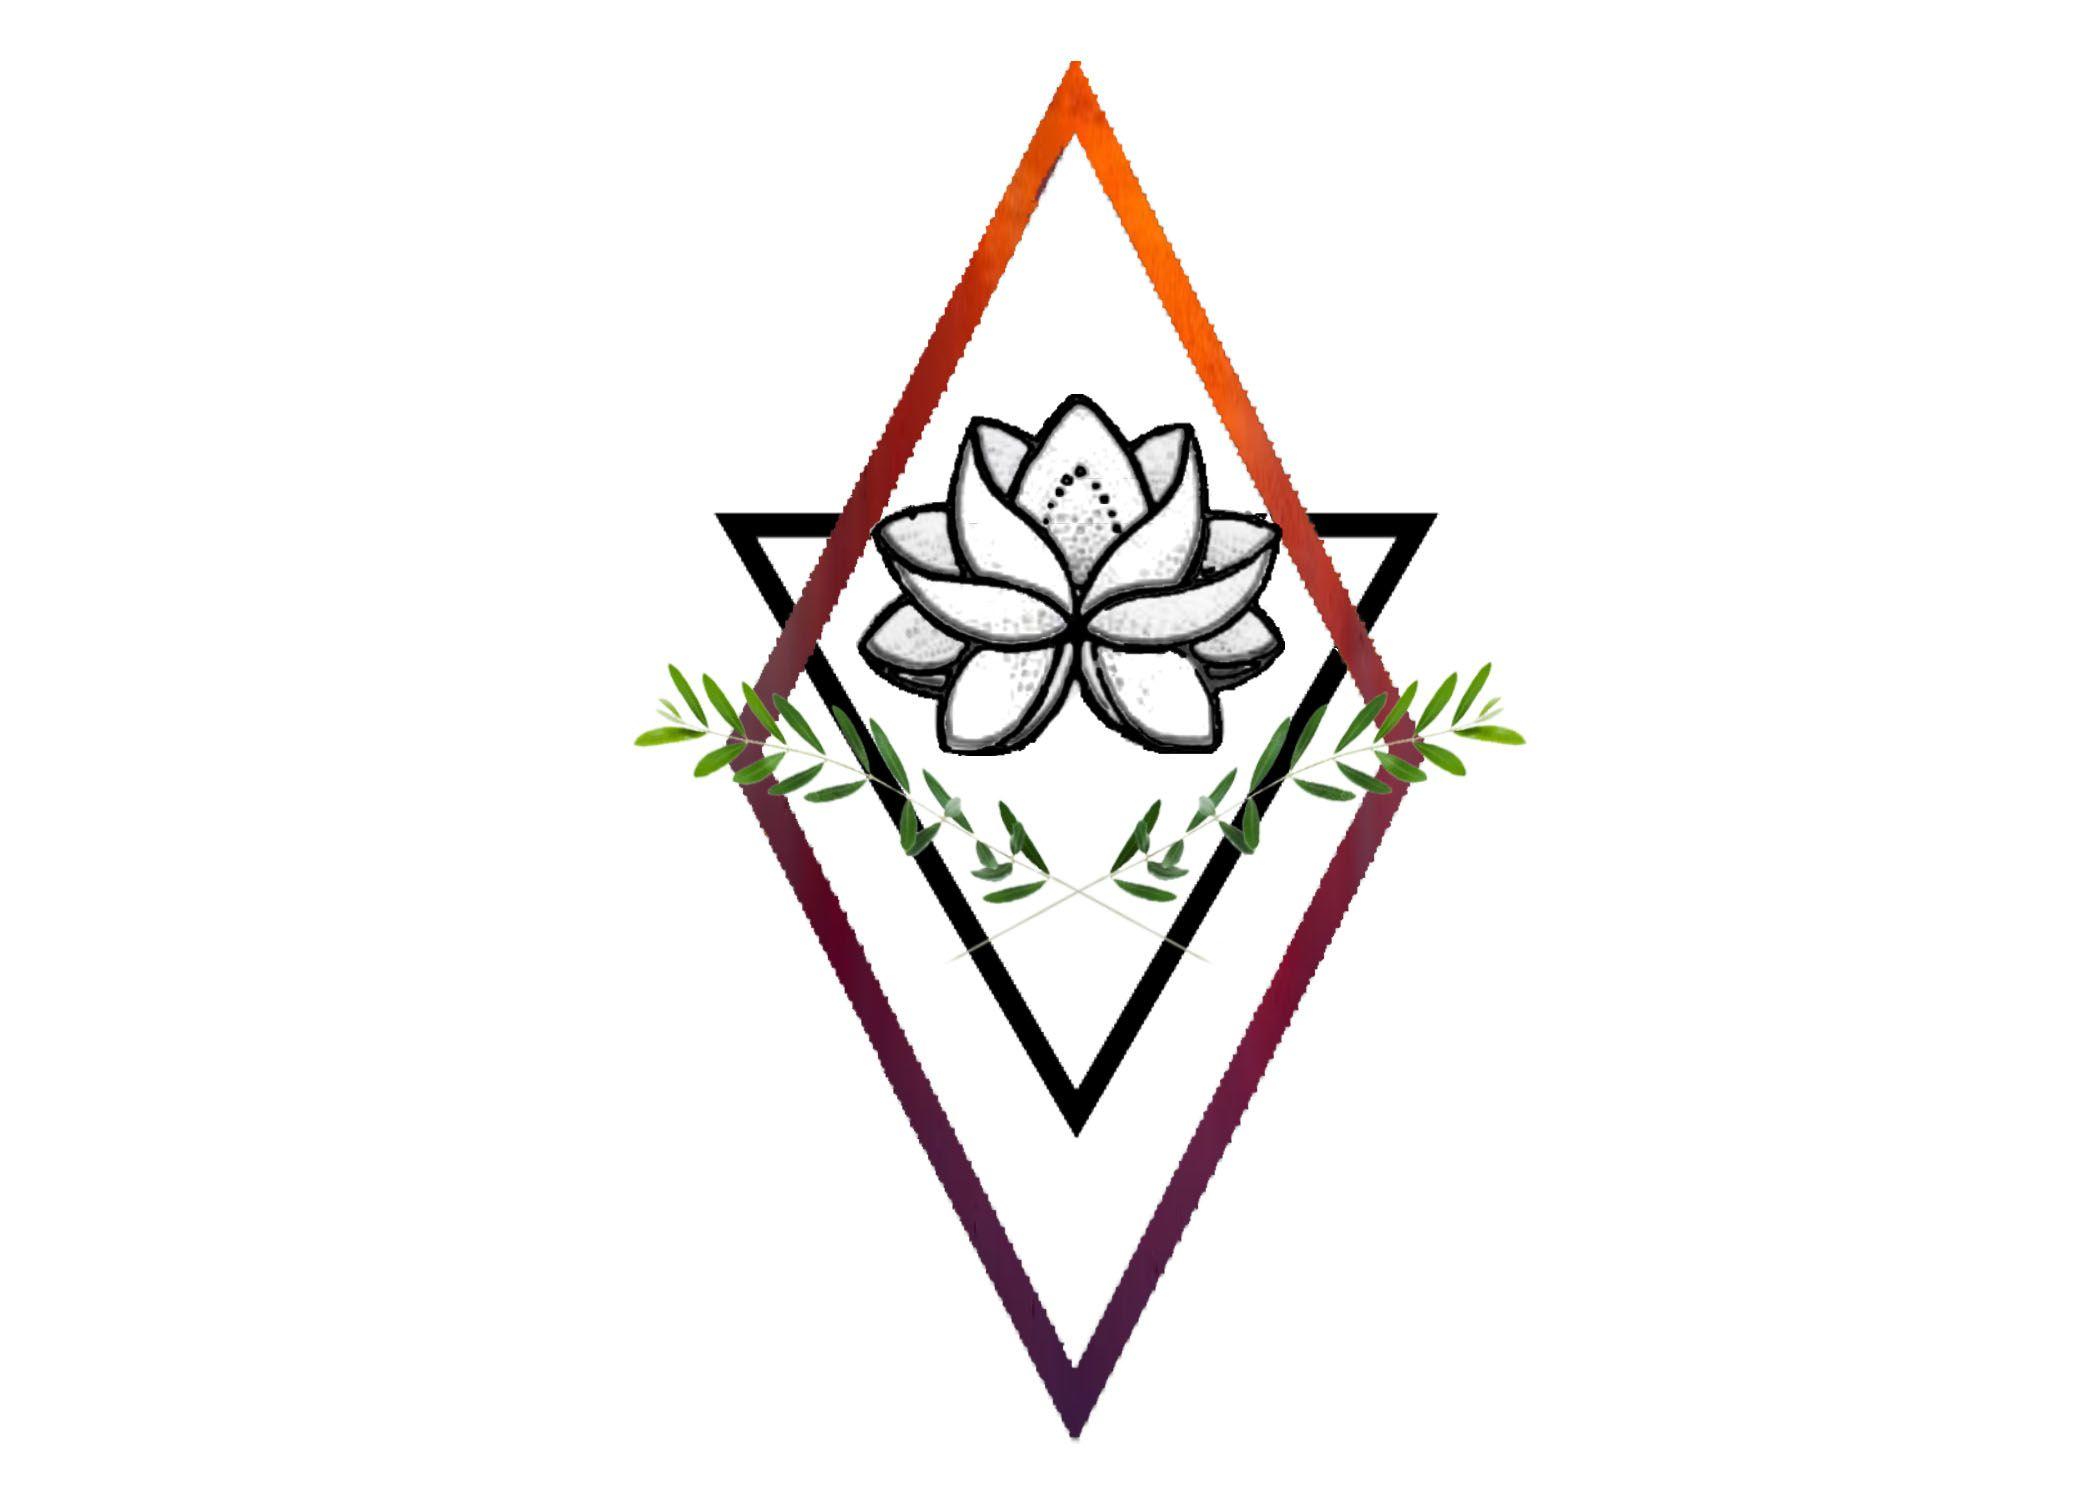 Triangle Lotus Flower Logo - Tattoo designed by me Lotus flower Triangle Geometric Botanical ...